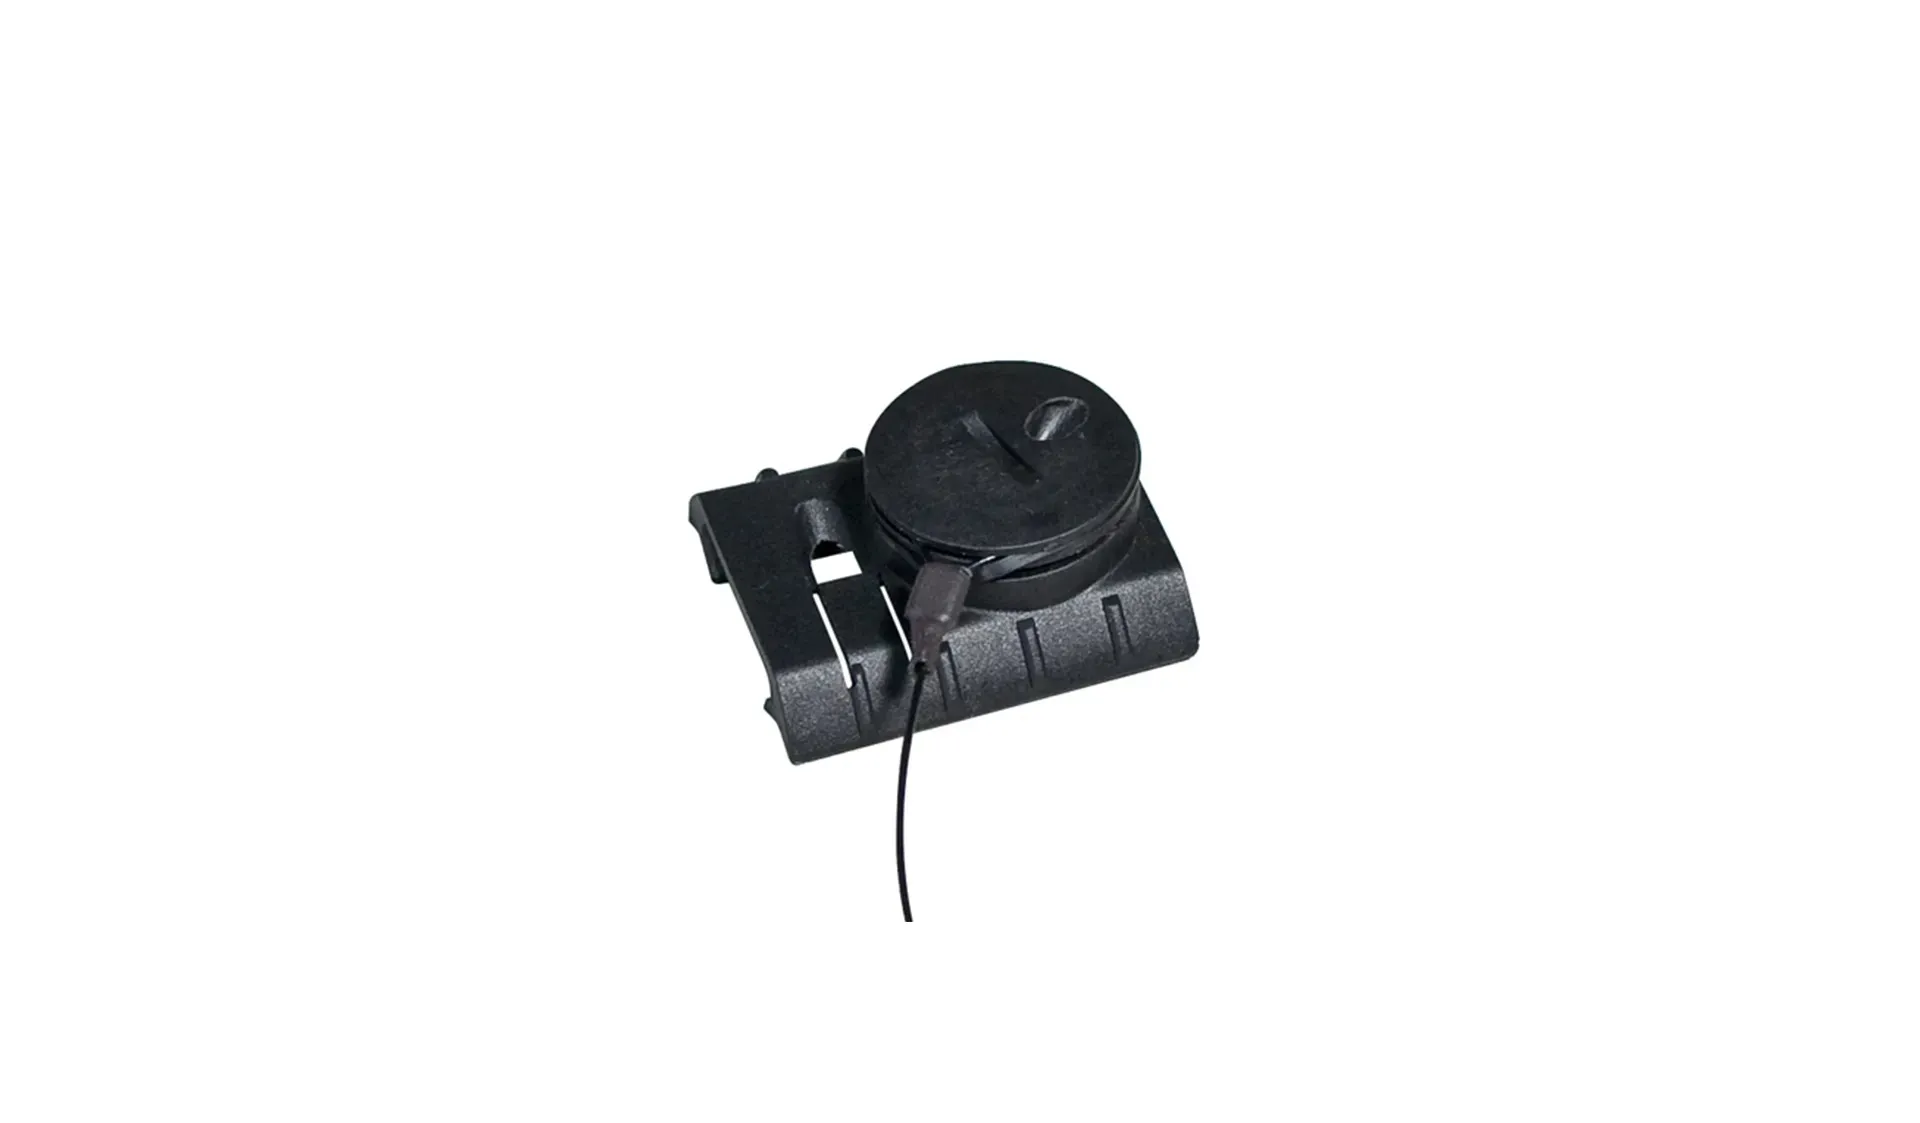 VORTEX Riflescope CR2032 Battery Holder